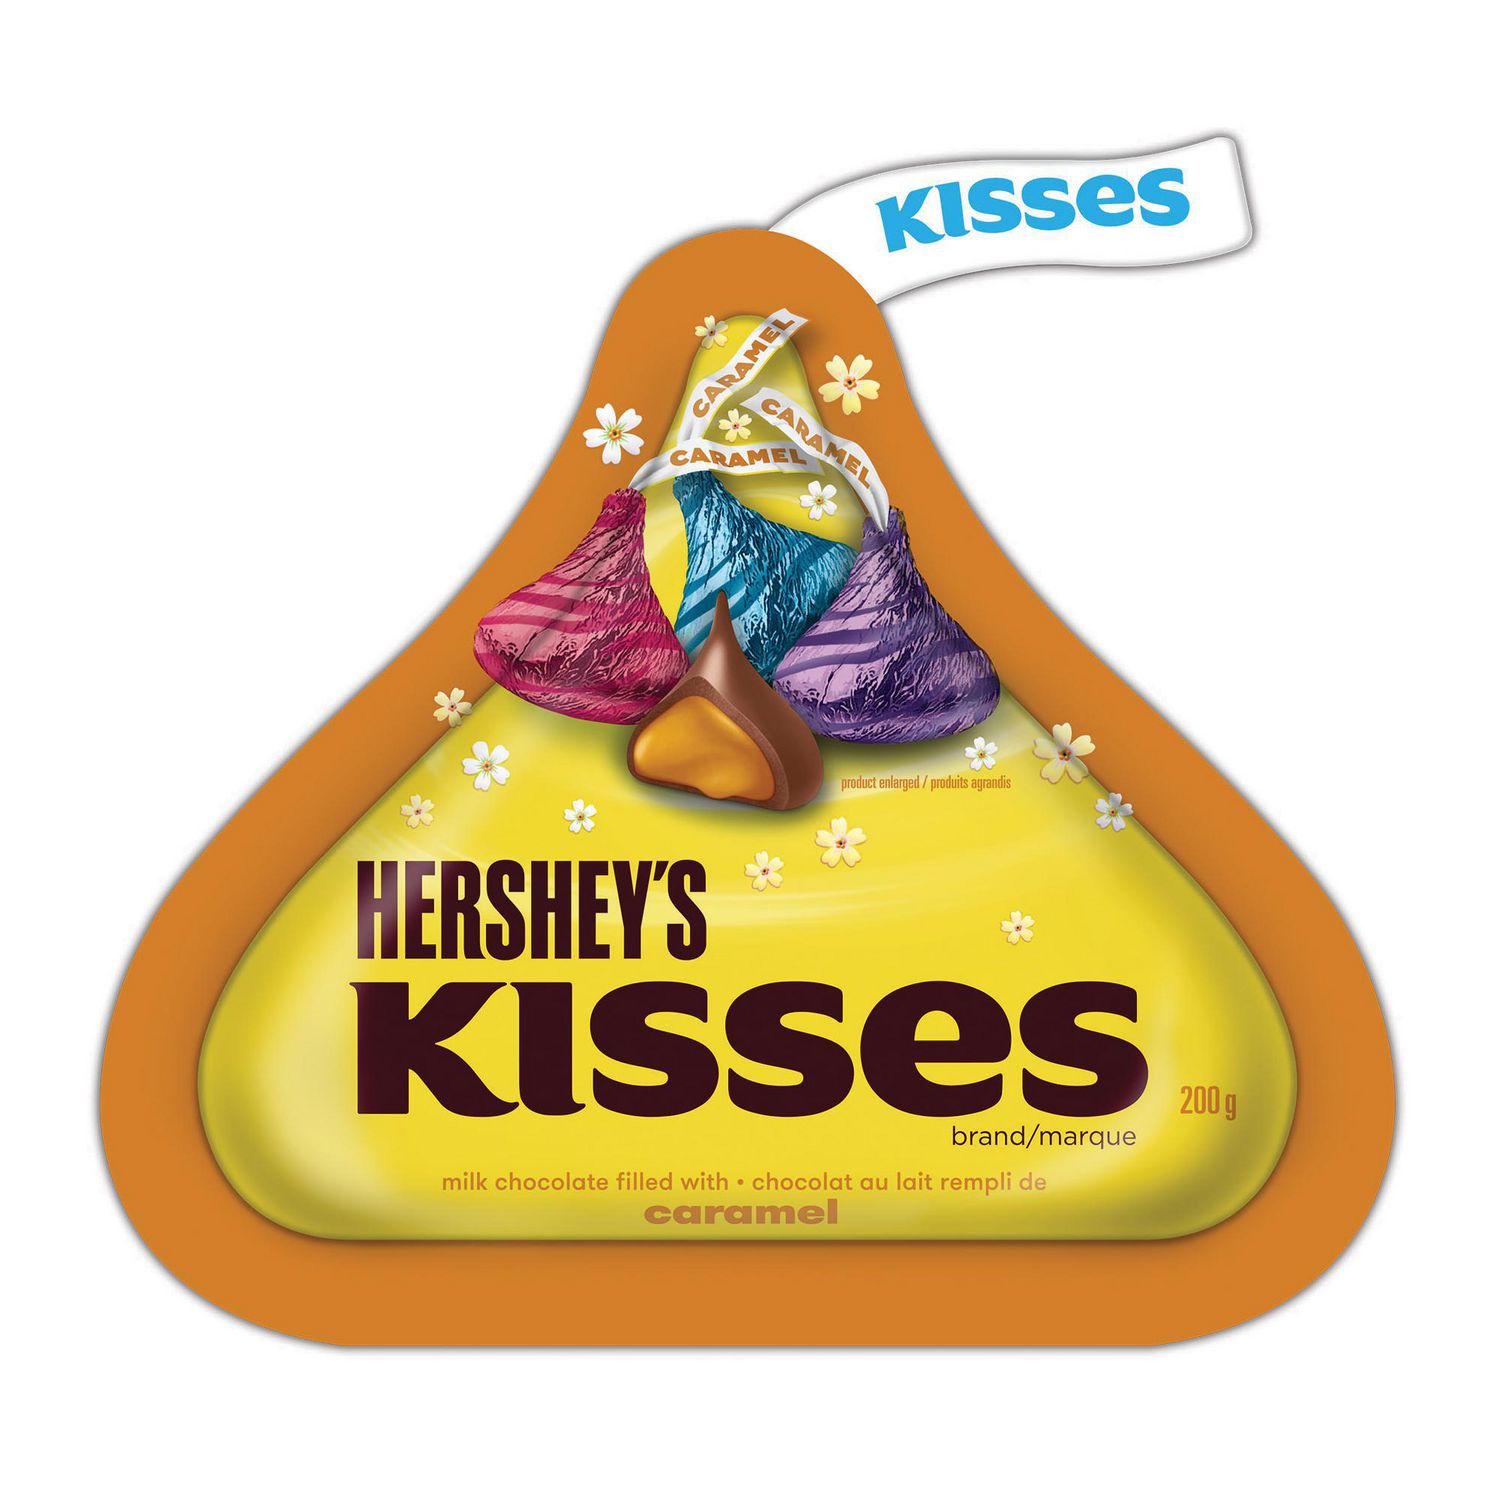 HERSHEY'S KISSES Milk Chocolates filled with Caramel | Walmart Canada